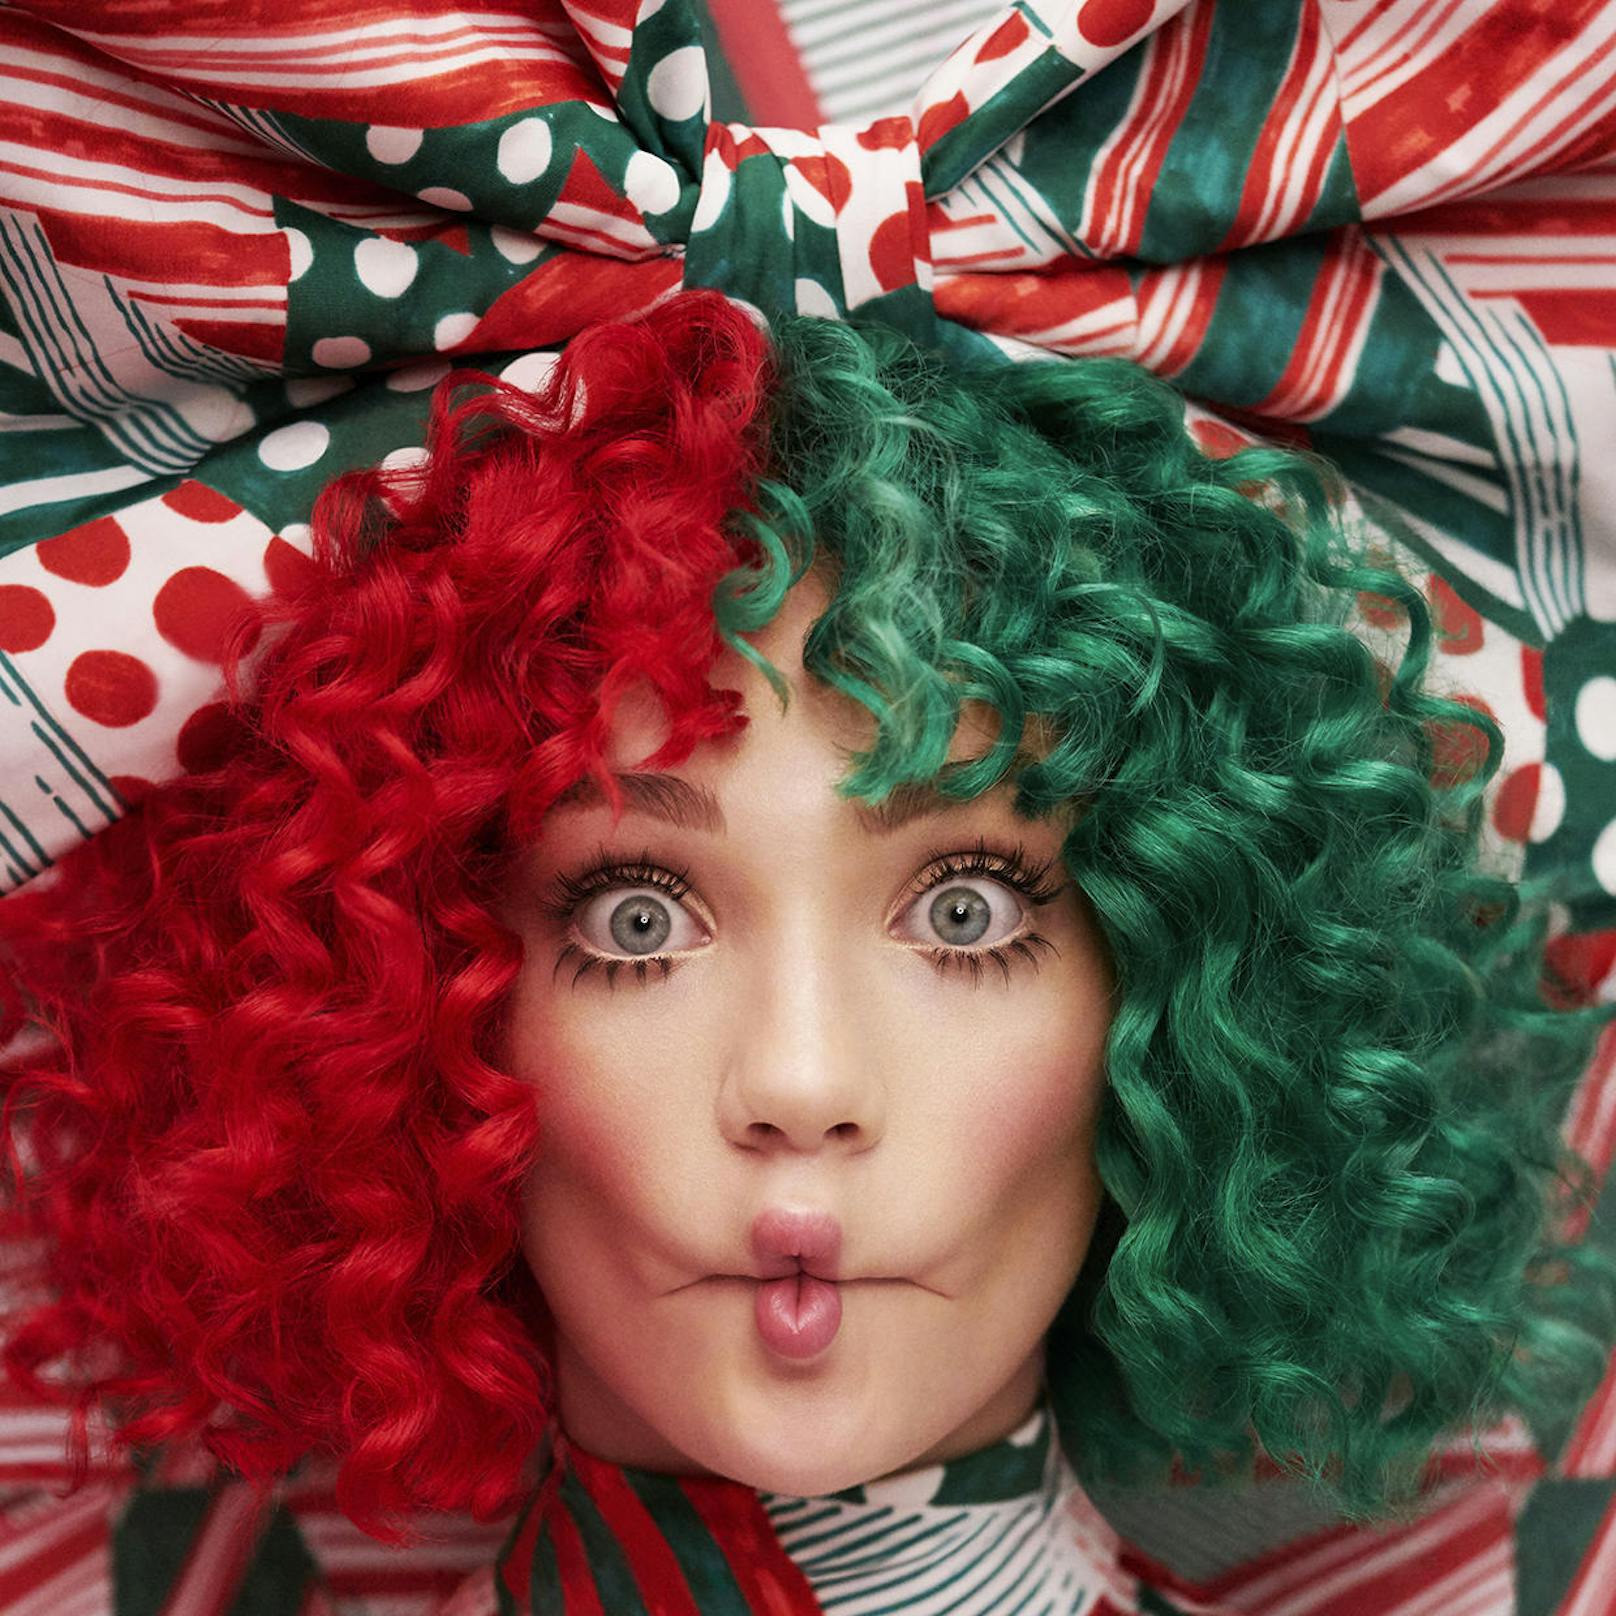 SIA - Das Weihnachtsalbum "Everyday Is Christmas"